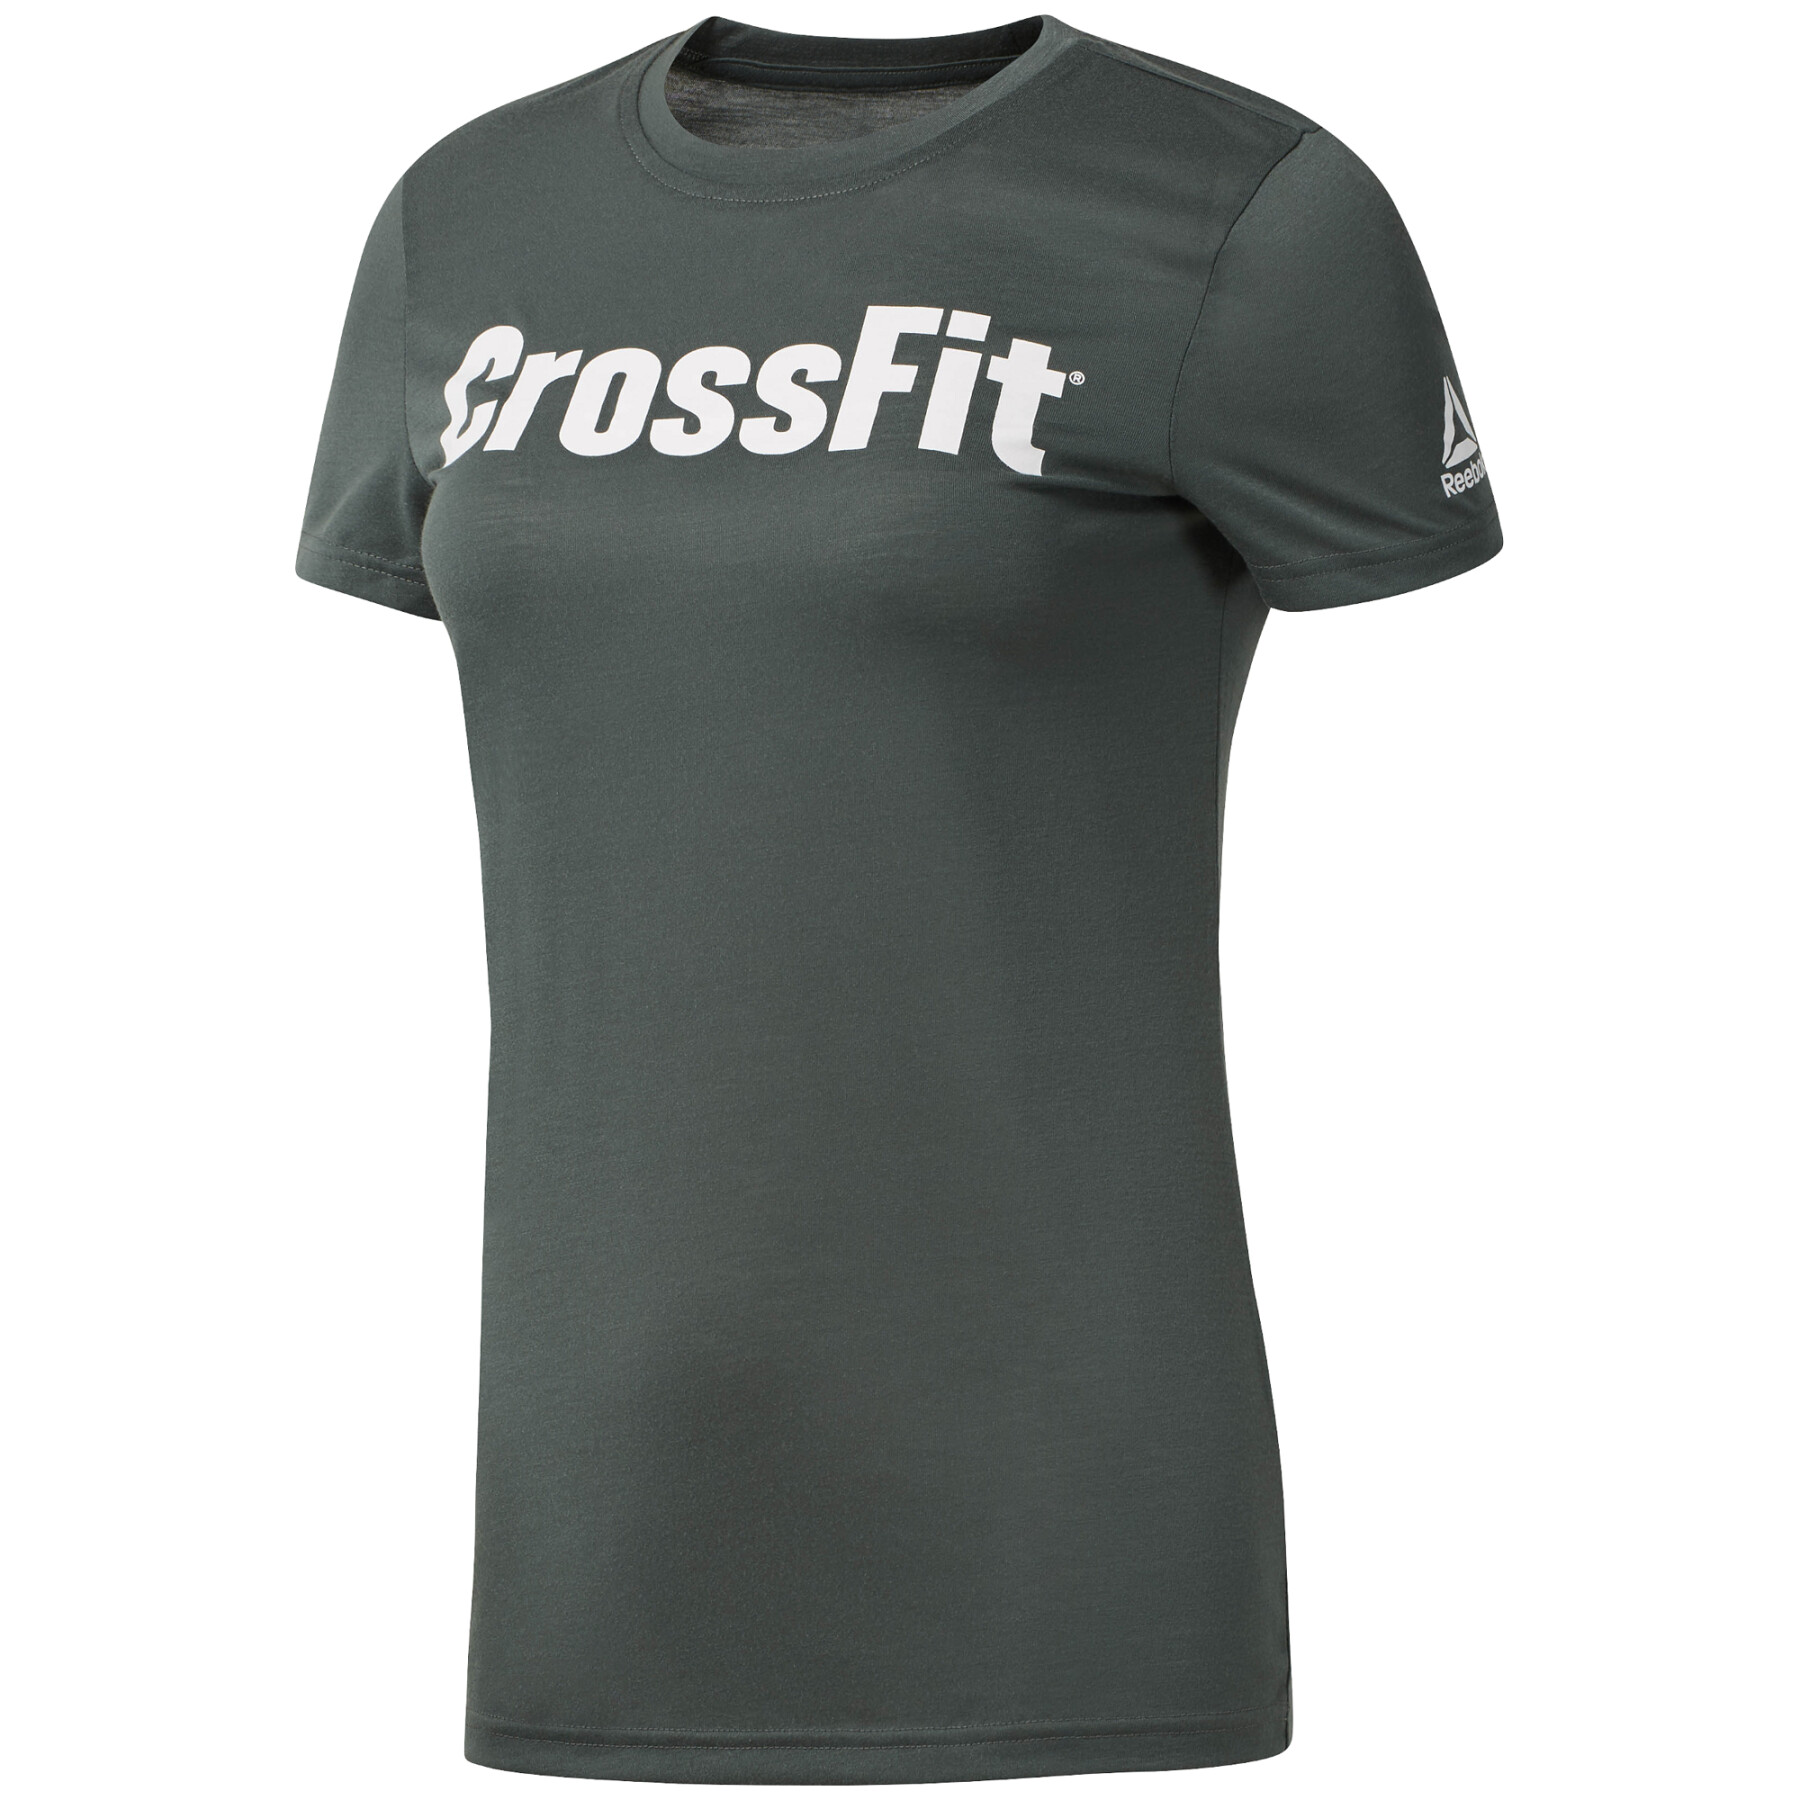 Camiseta de mujer Reebok Crossfit F.E.F.